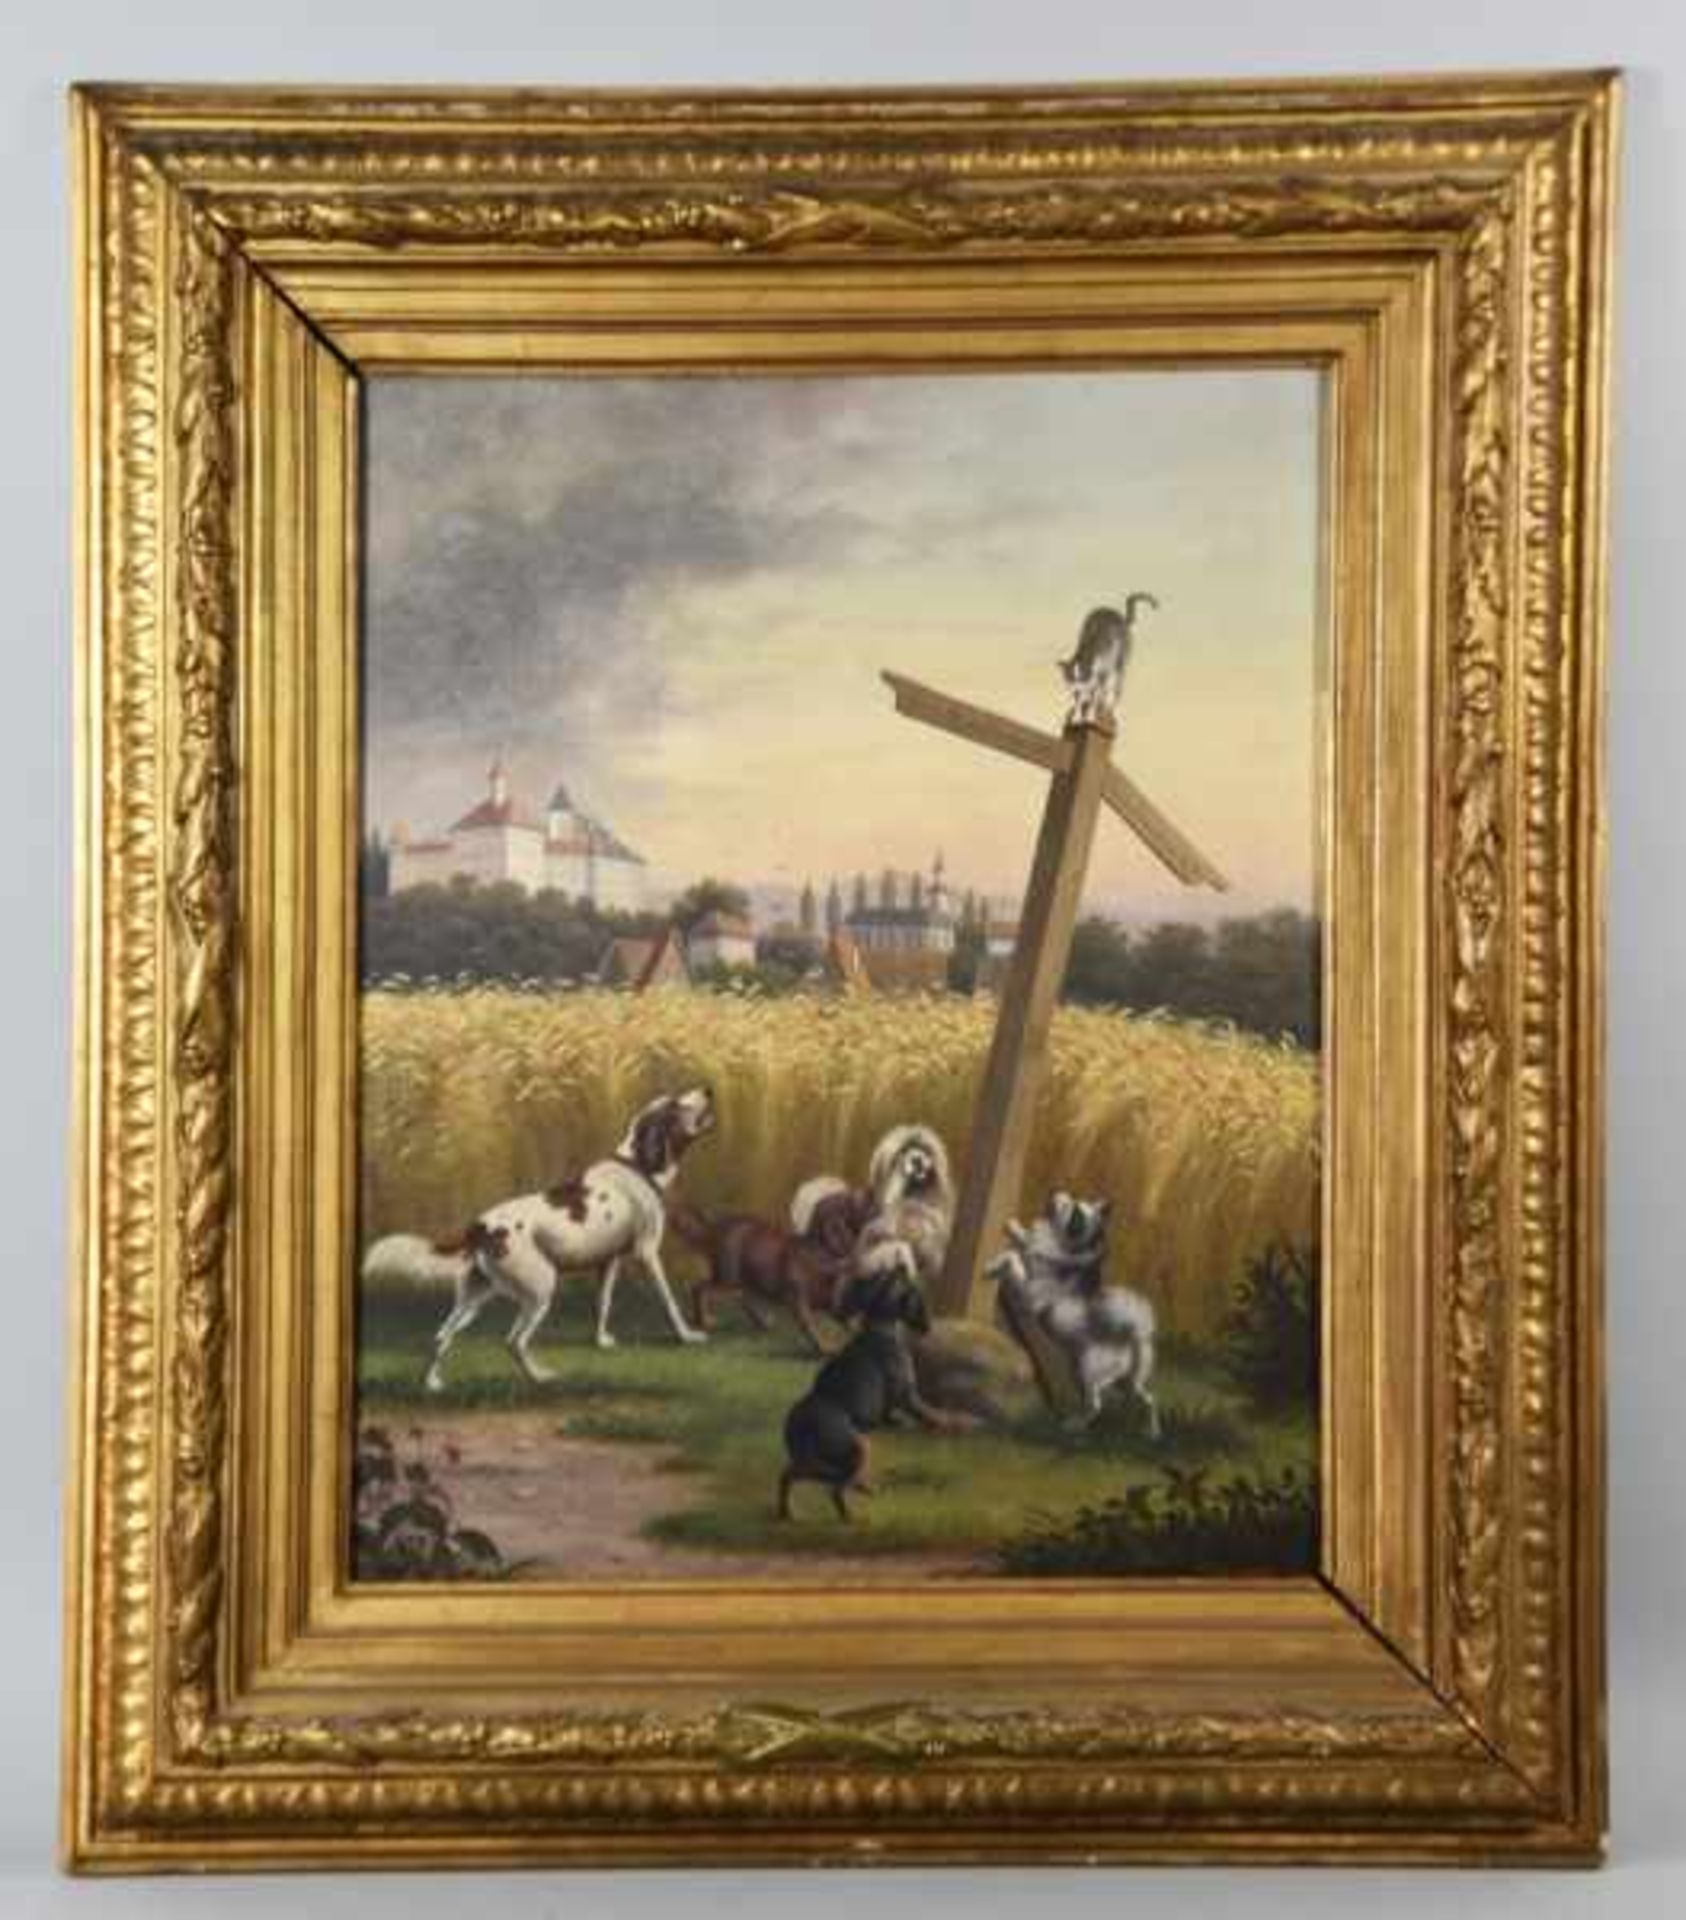 GEORGIUS Robert (1871 - 1942 Deutschland) "Hunde am Wegkreuz", 5 Hunde bellend vor einem Wegkreuz - Bild 3 aus 5